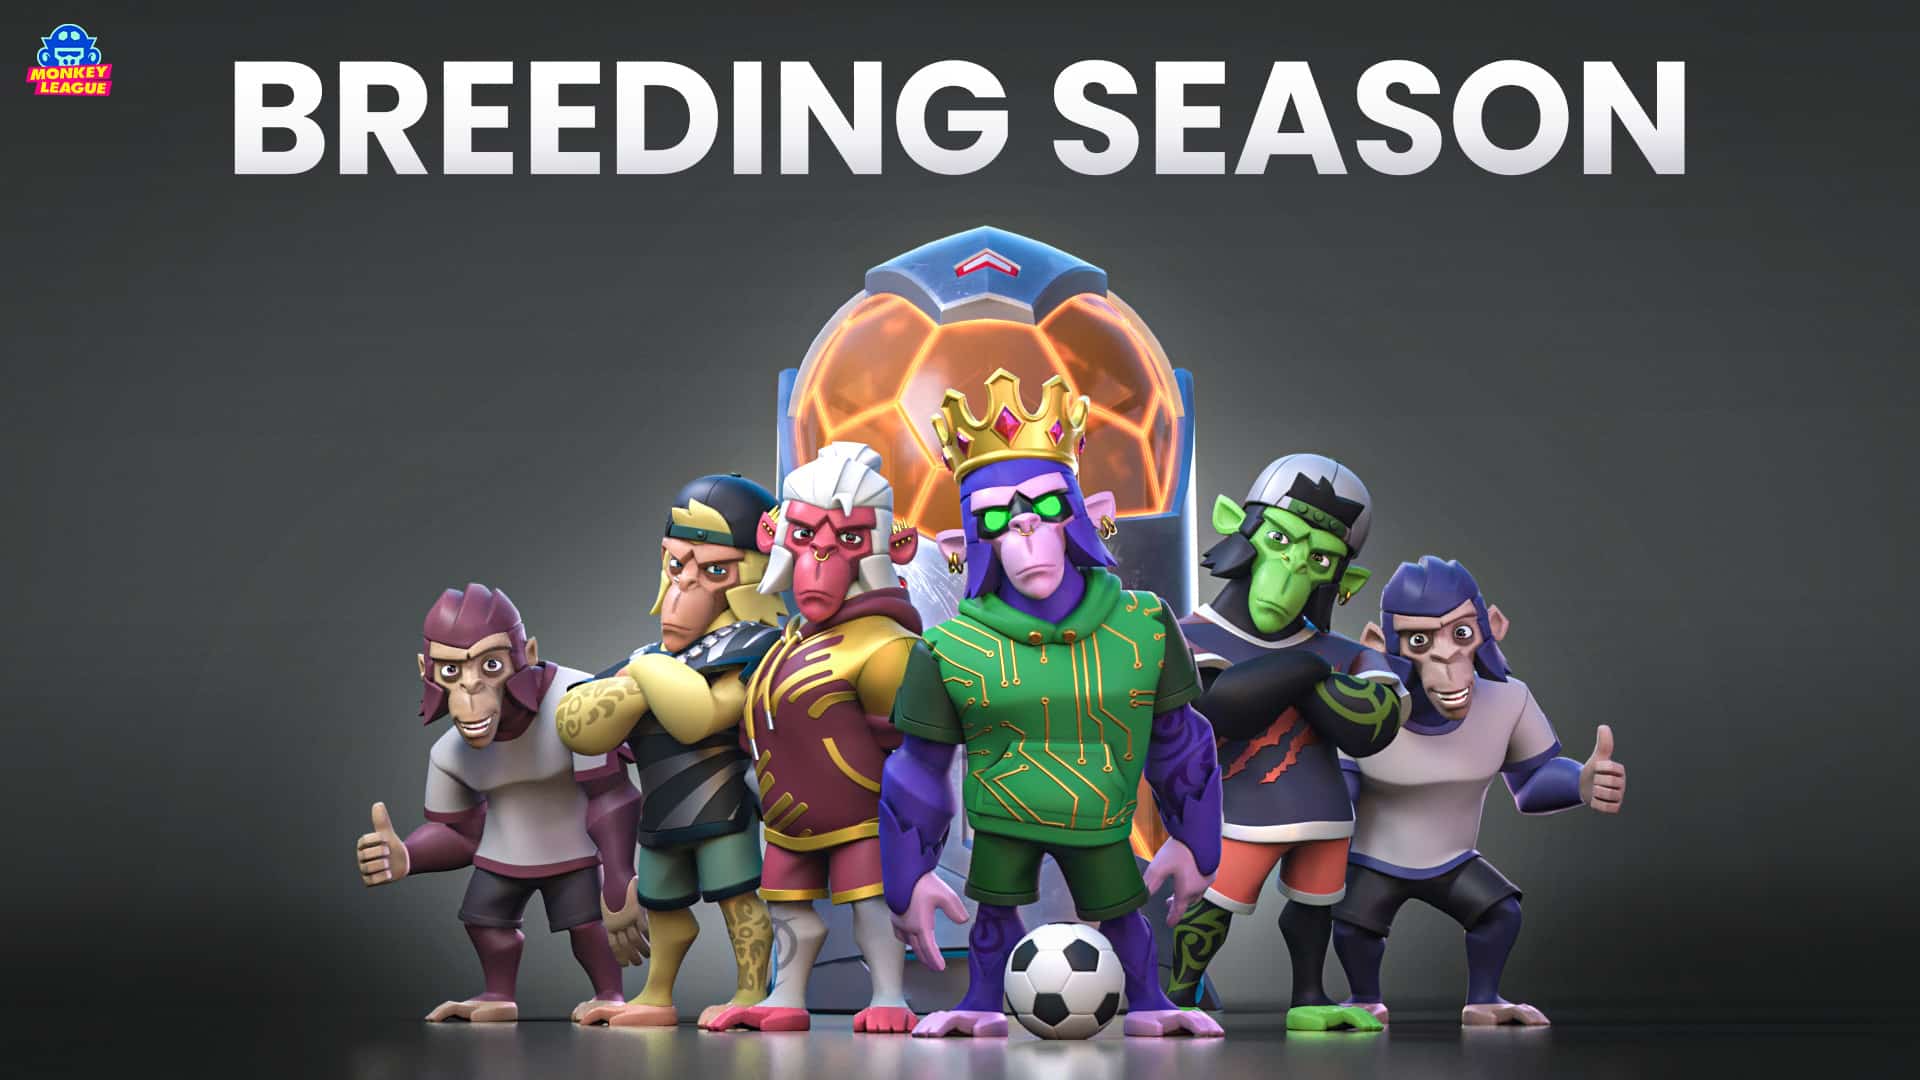 Web3-soccer-game-monkeyleague-kicks-off-nft-breeding-season